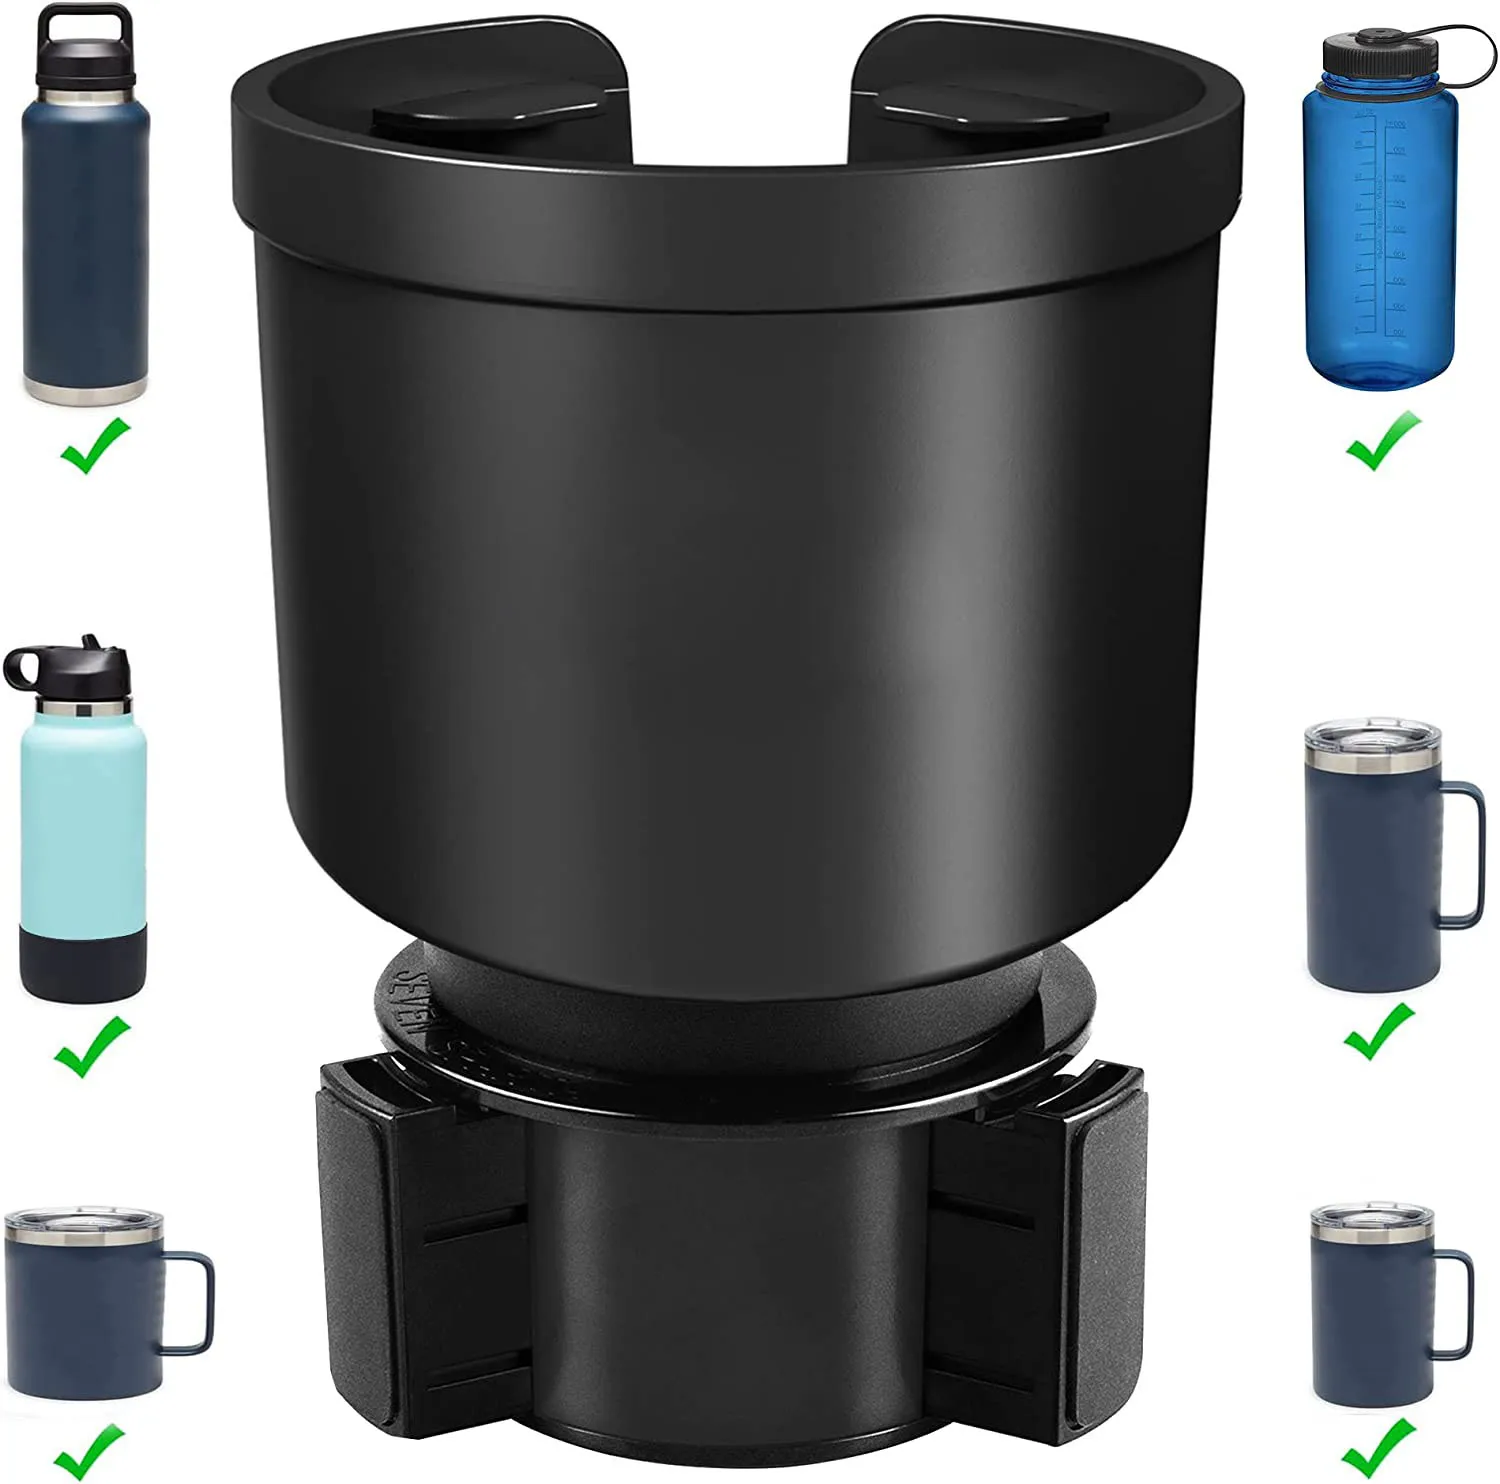 

Car Cup Holder Expander Adapter (Adjustable) - Fits Hydro Flask, Yeti, Nalgene, Large 32/40 oz. Bottles & Big Drinks